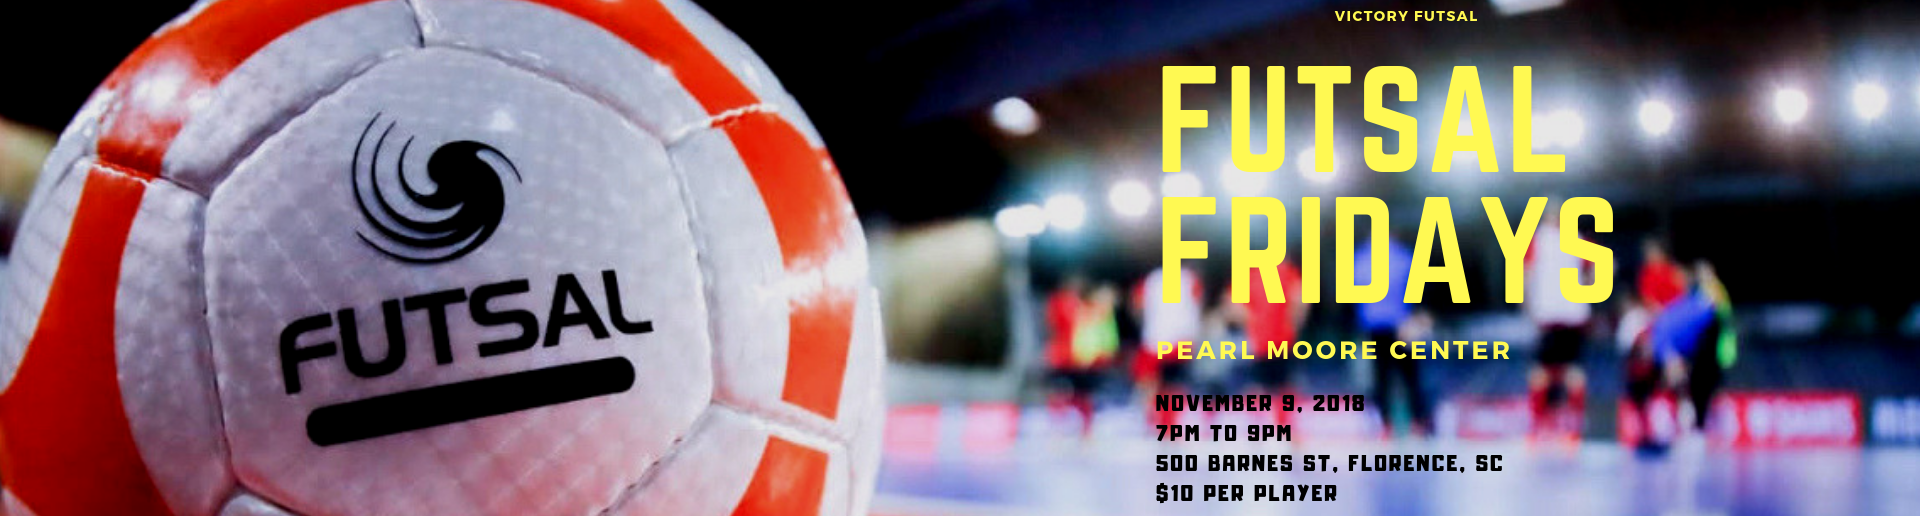 Futsal Fridays